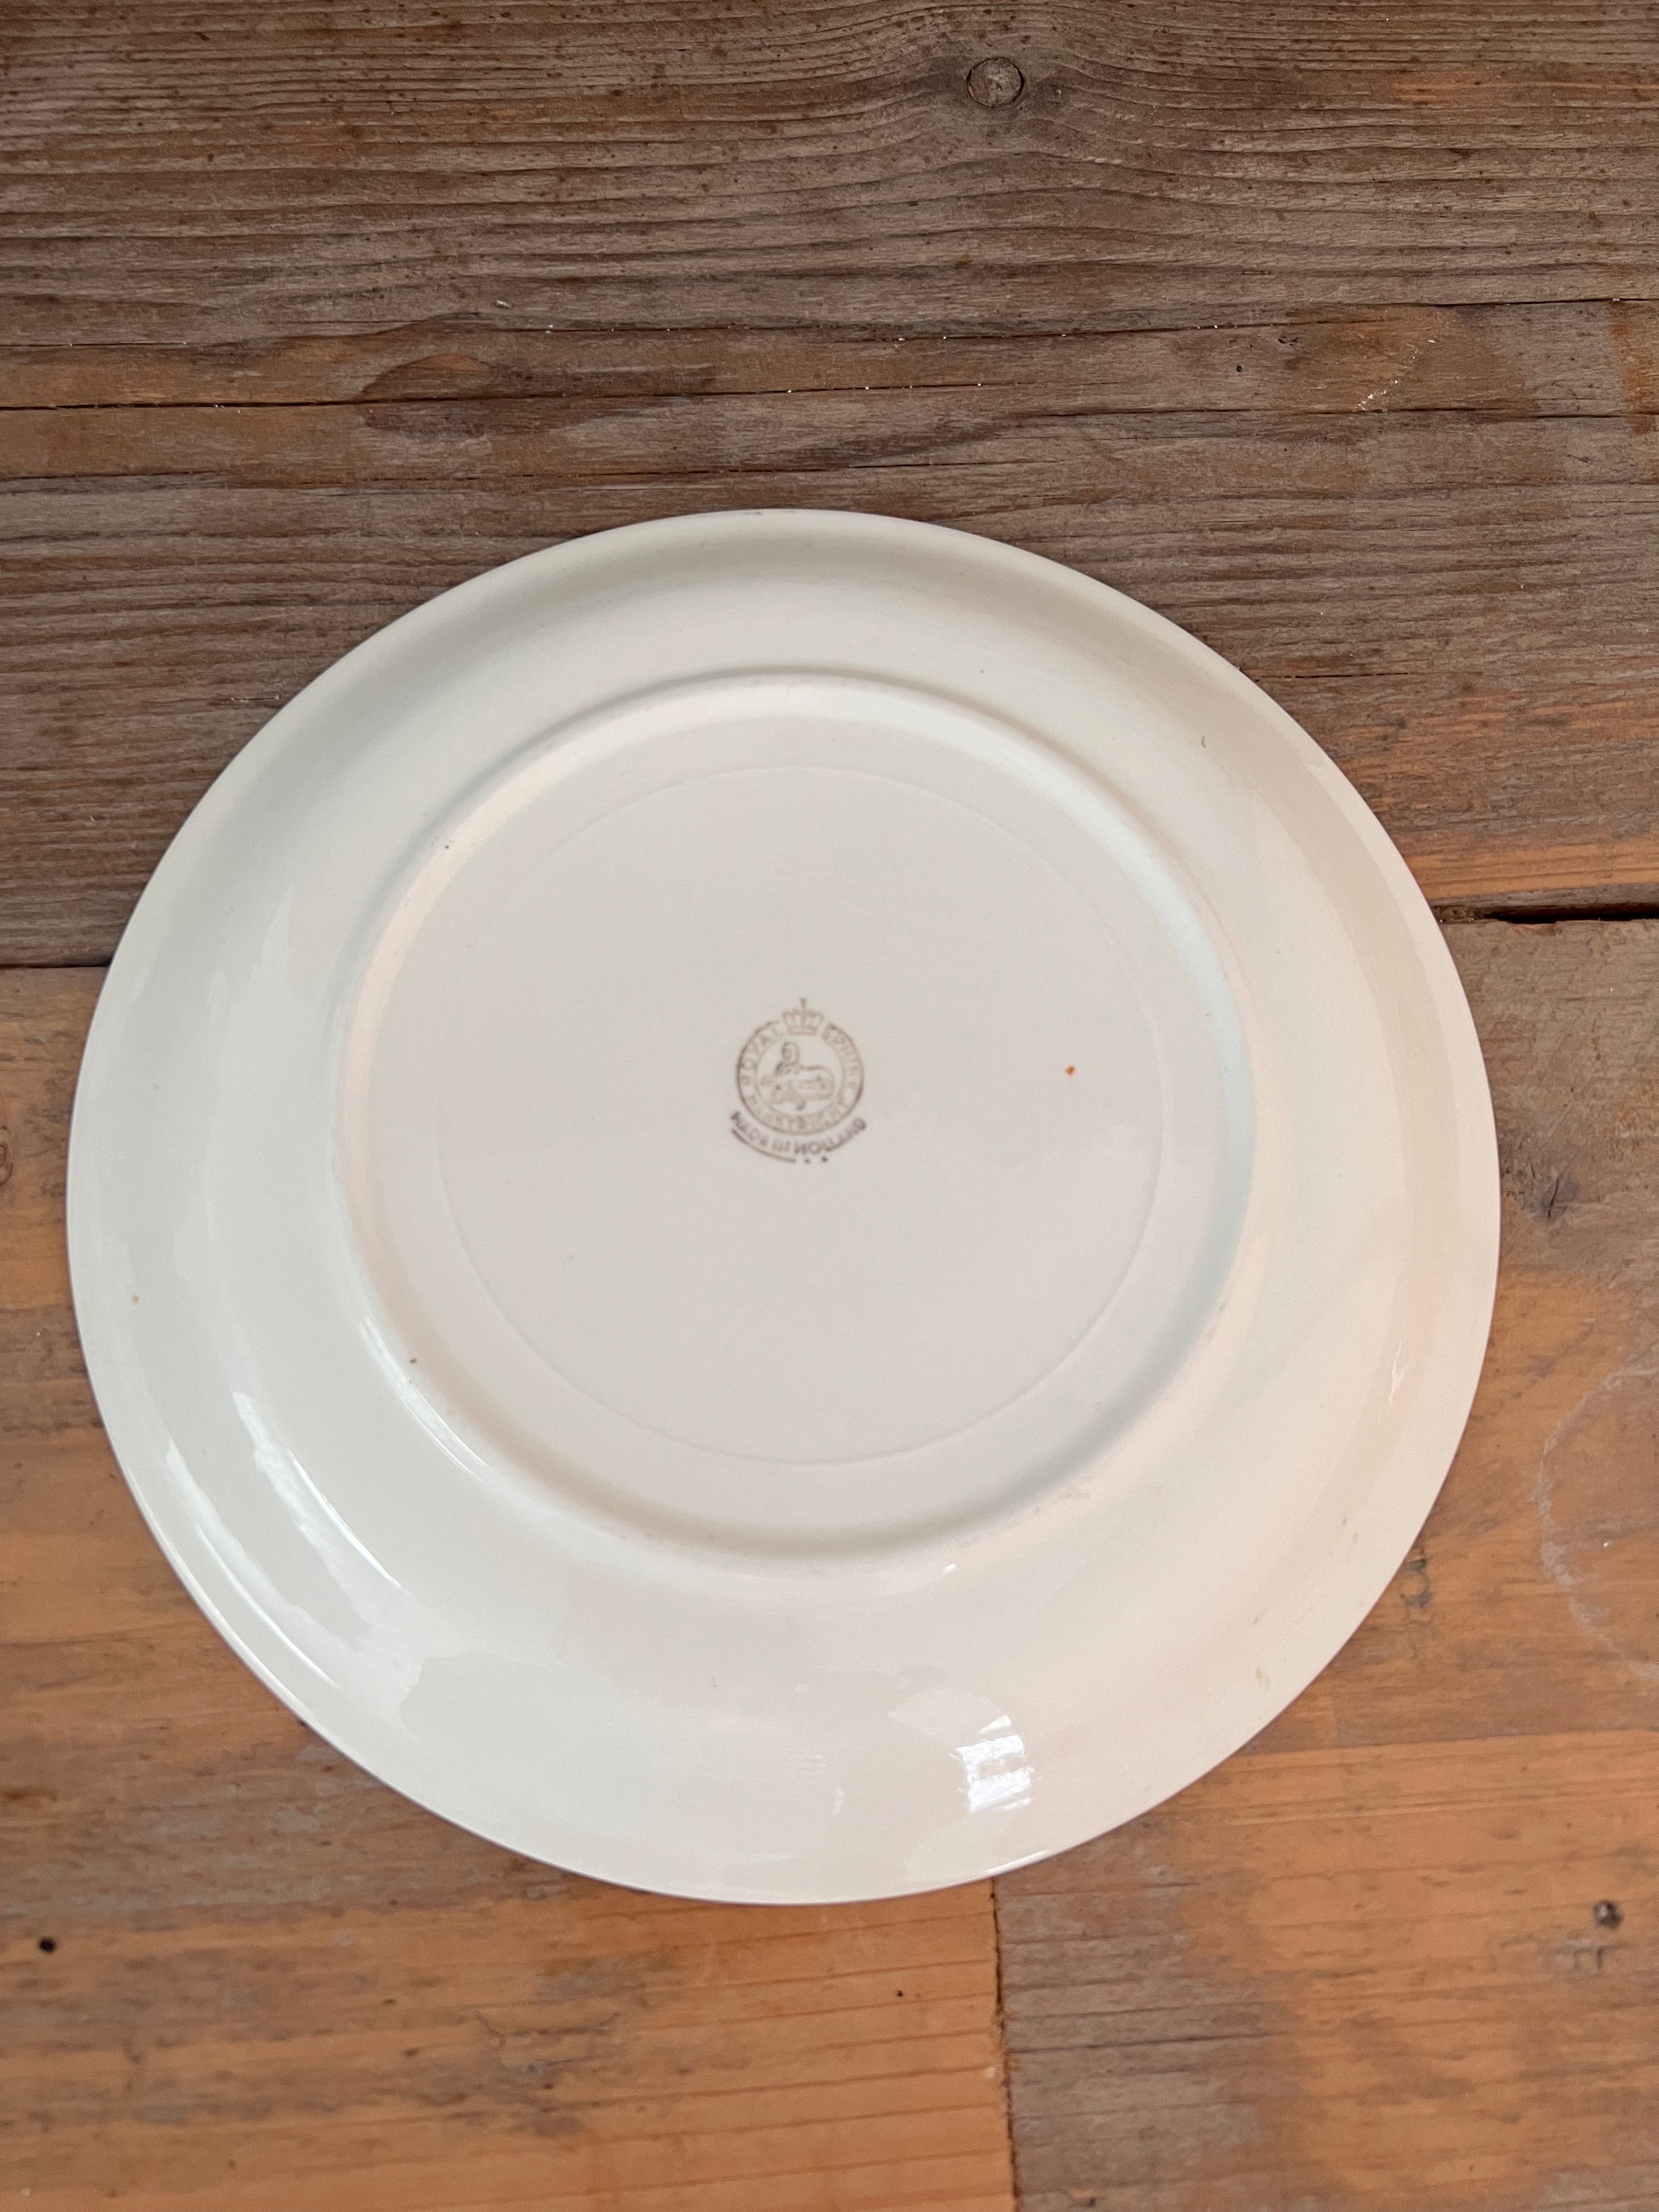 Traditional Spakenburg breakfast plate